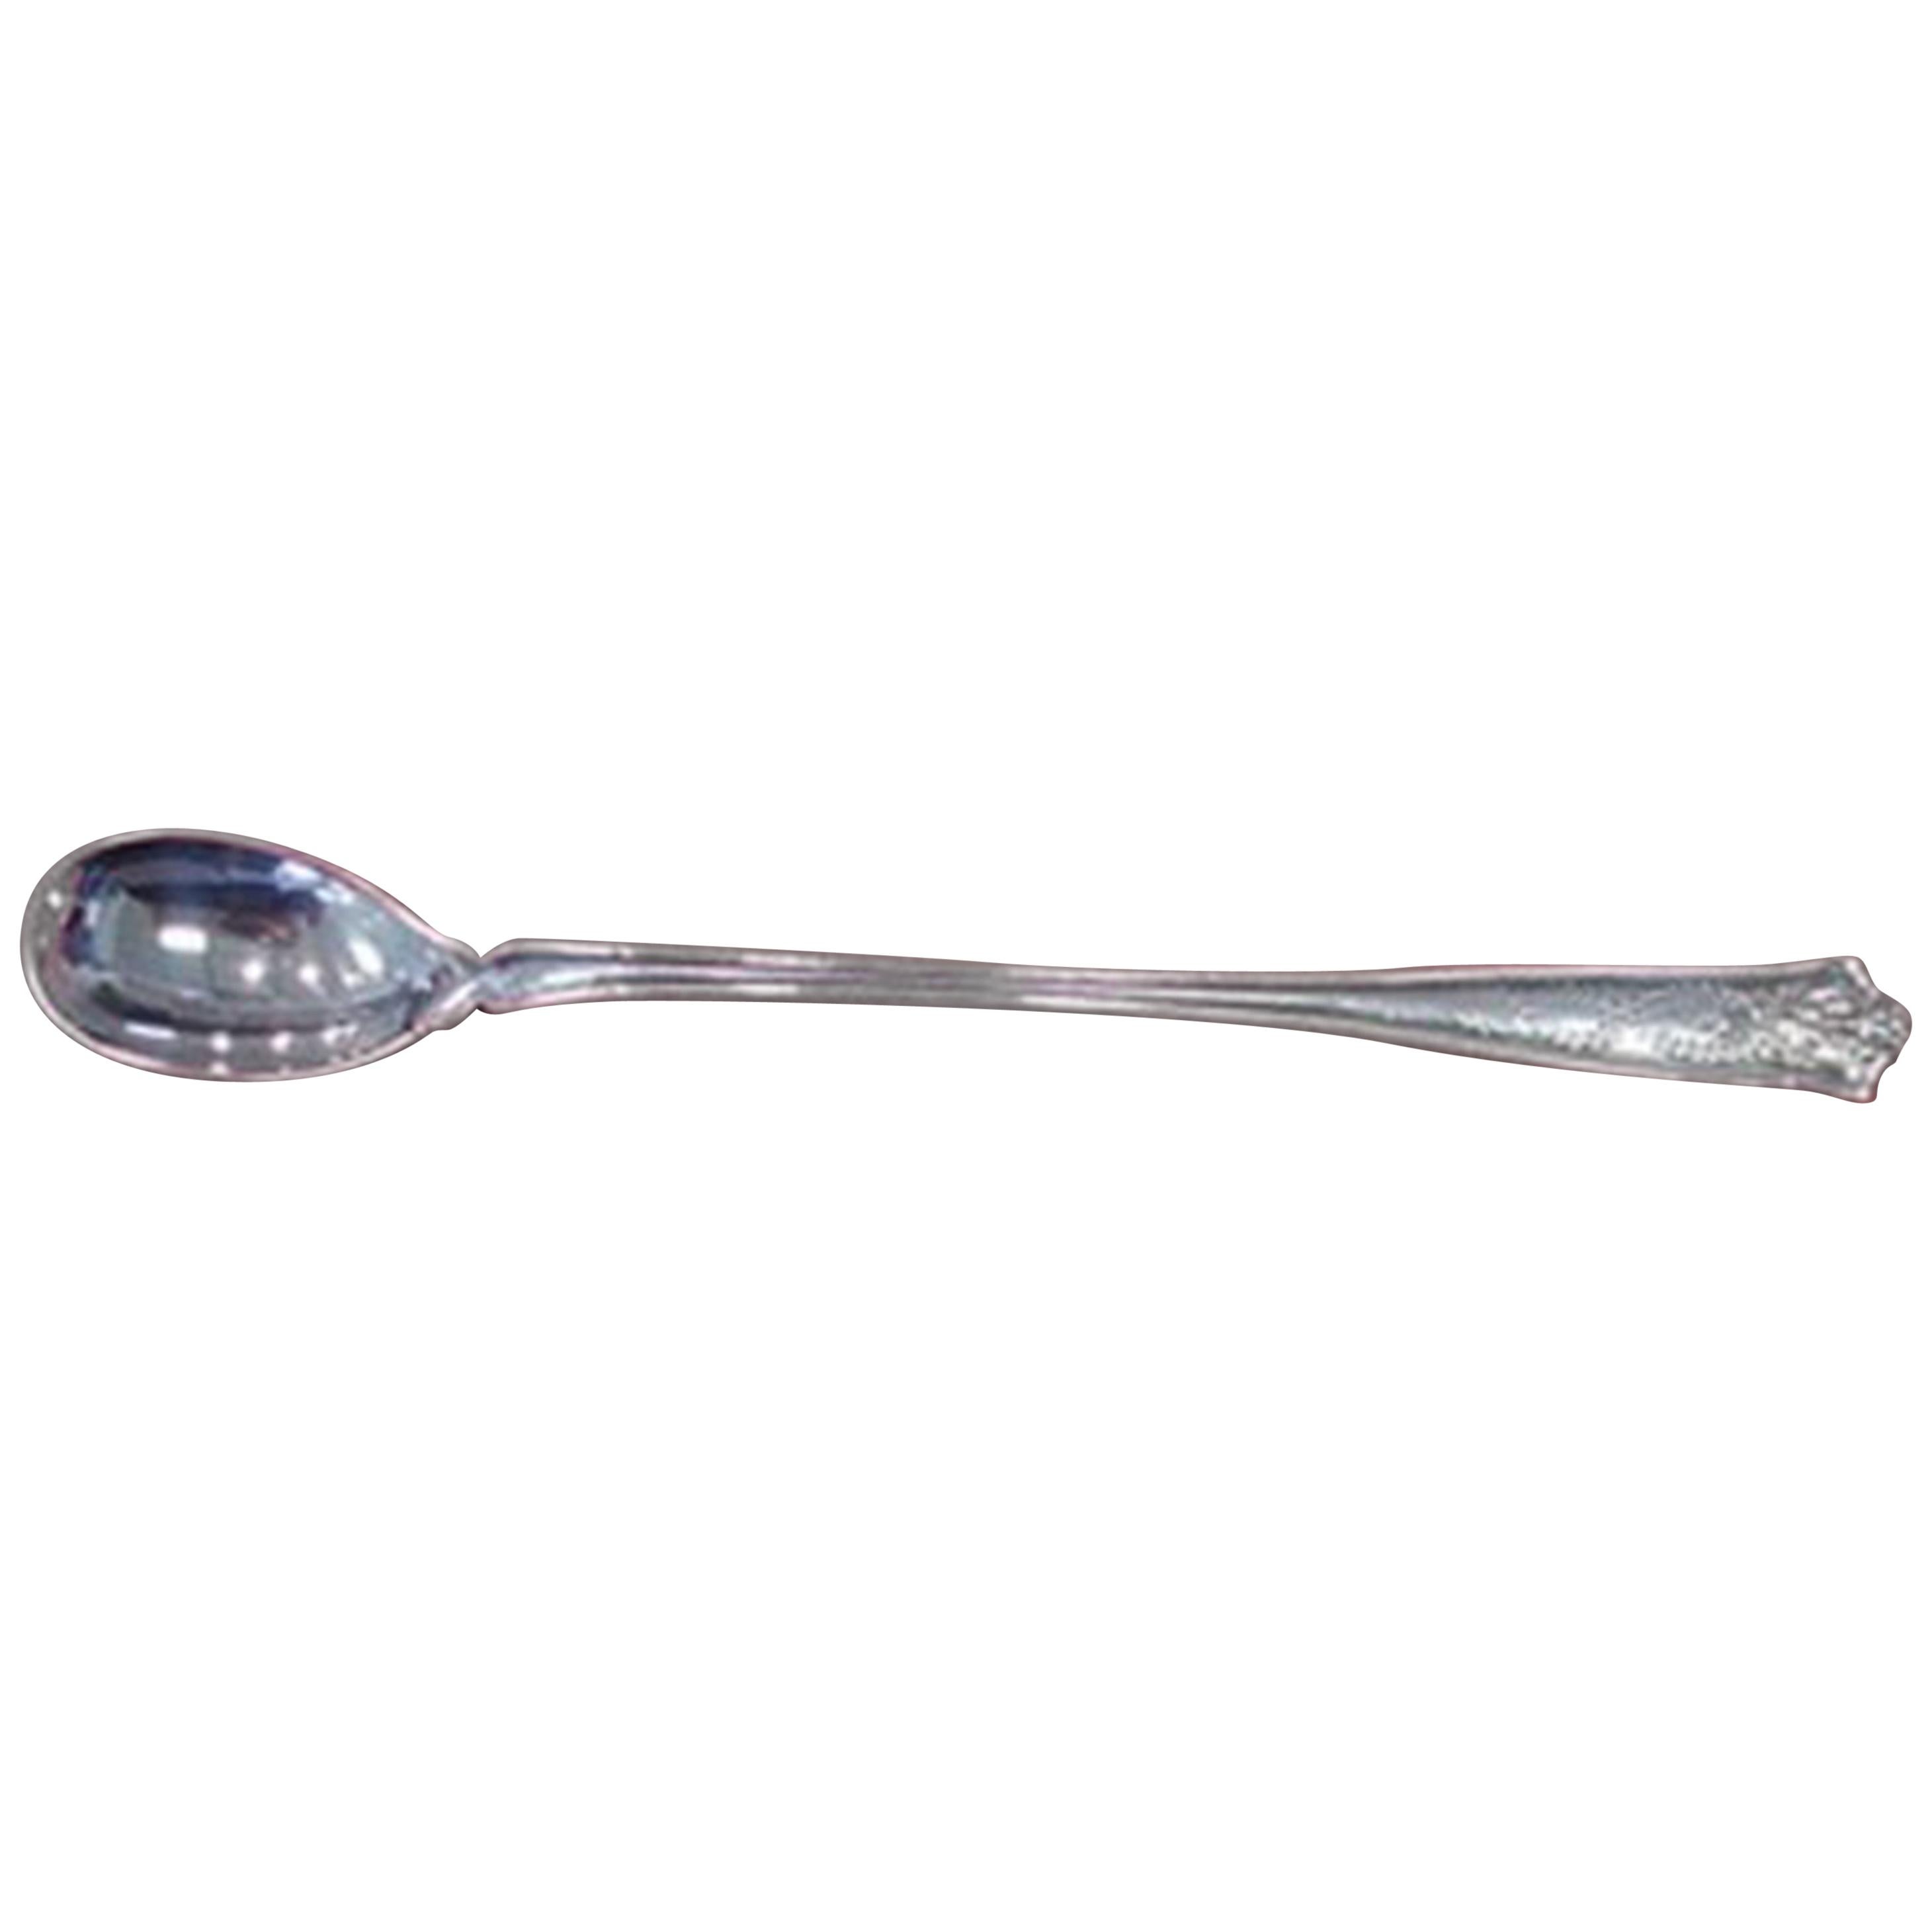 Winthrop by Tiffany & Co. Sterling Silver Iced Tea Spoon